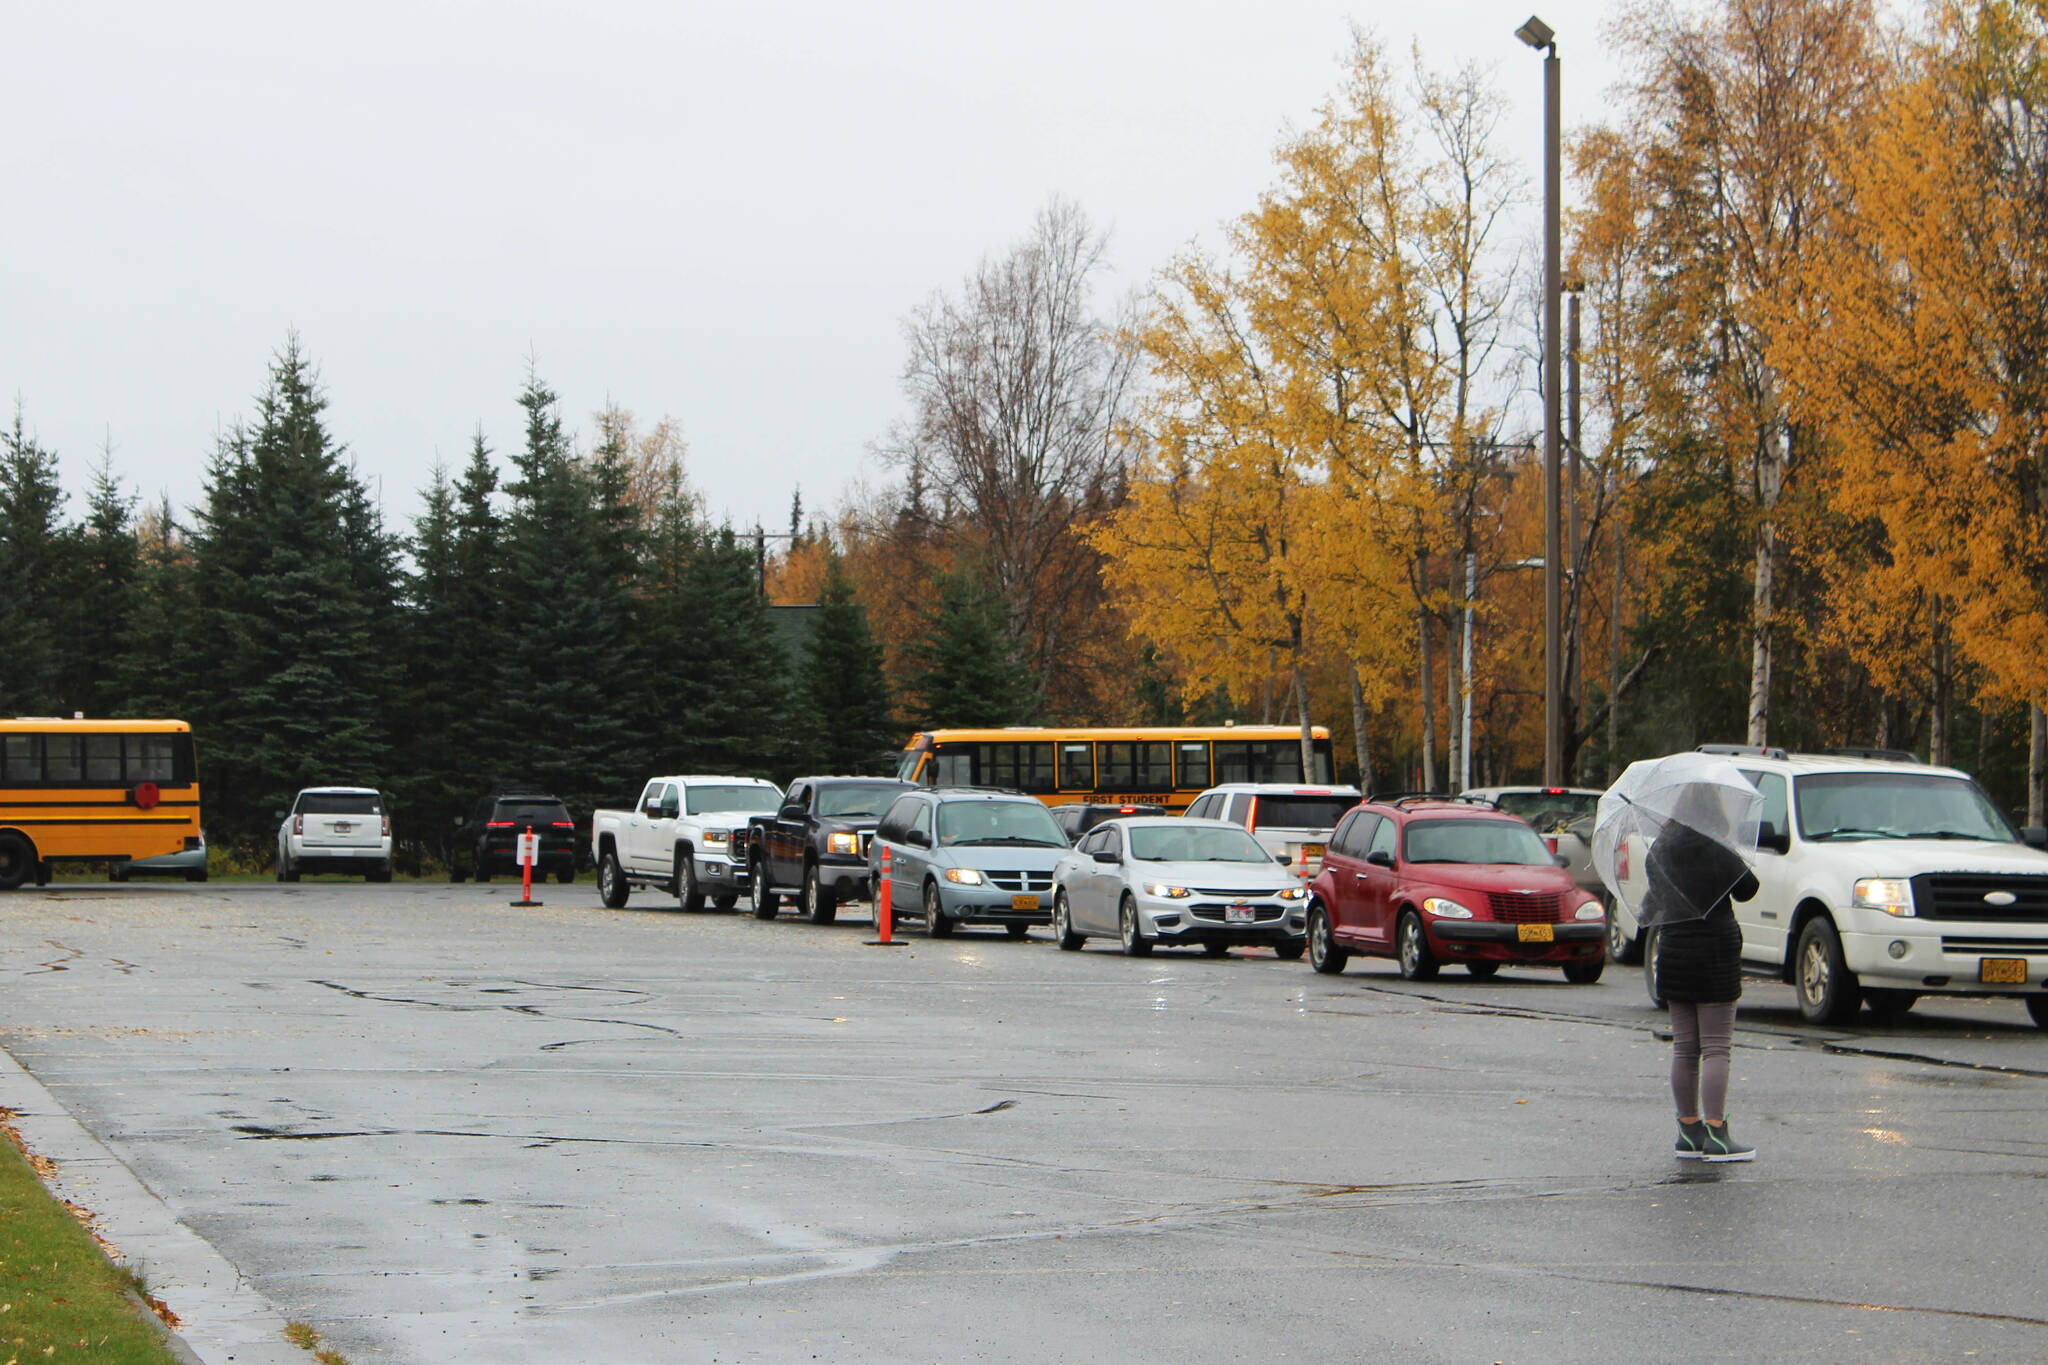 Staff help direct student pick up traffic at Mountain View Elementary School on Thursday, Sept. 29, 2022 in Kenai, Alaska. (Ashlyn O'Hara/Peninsula Clarion)